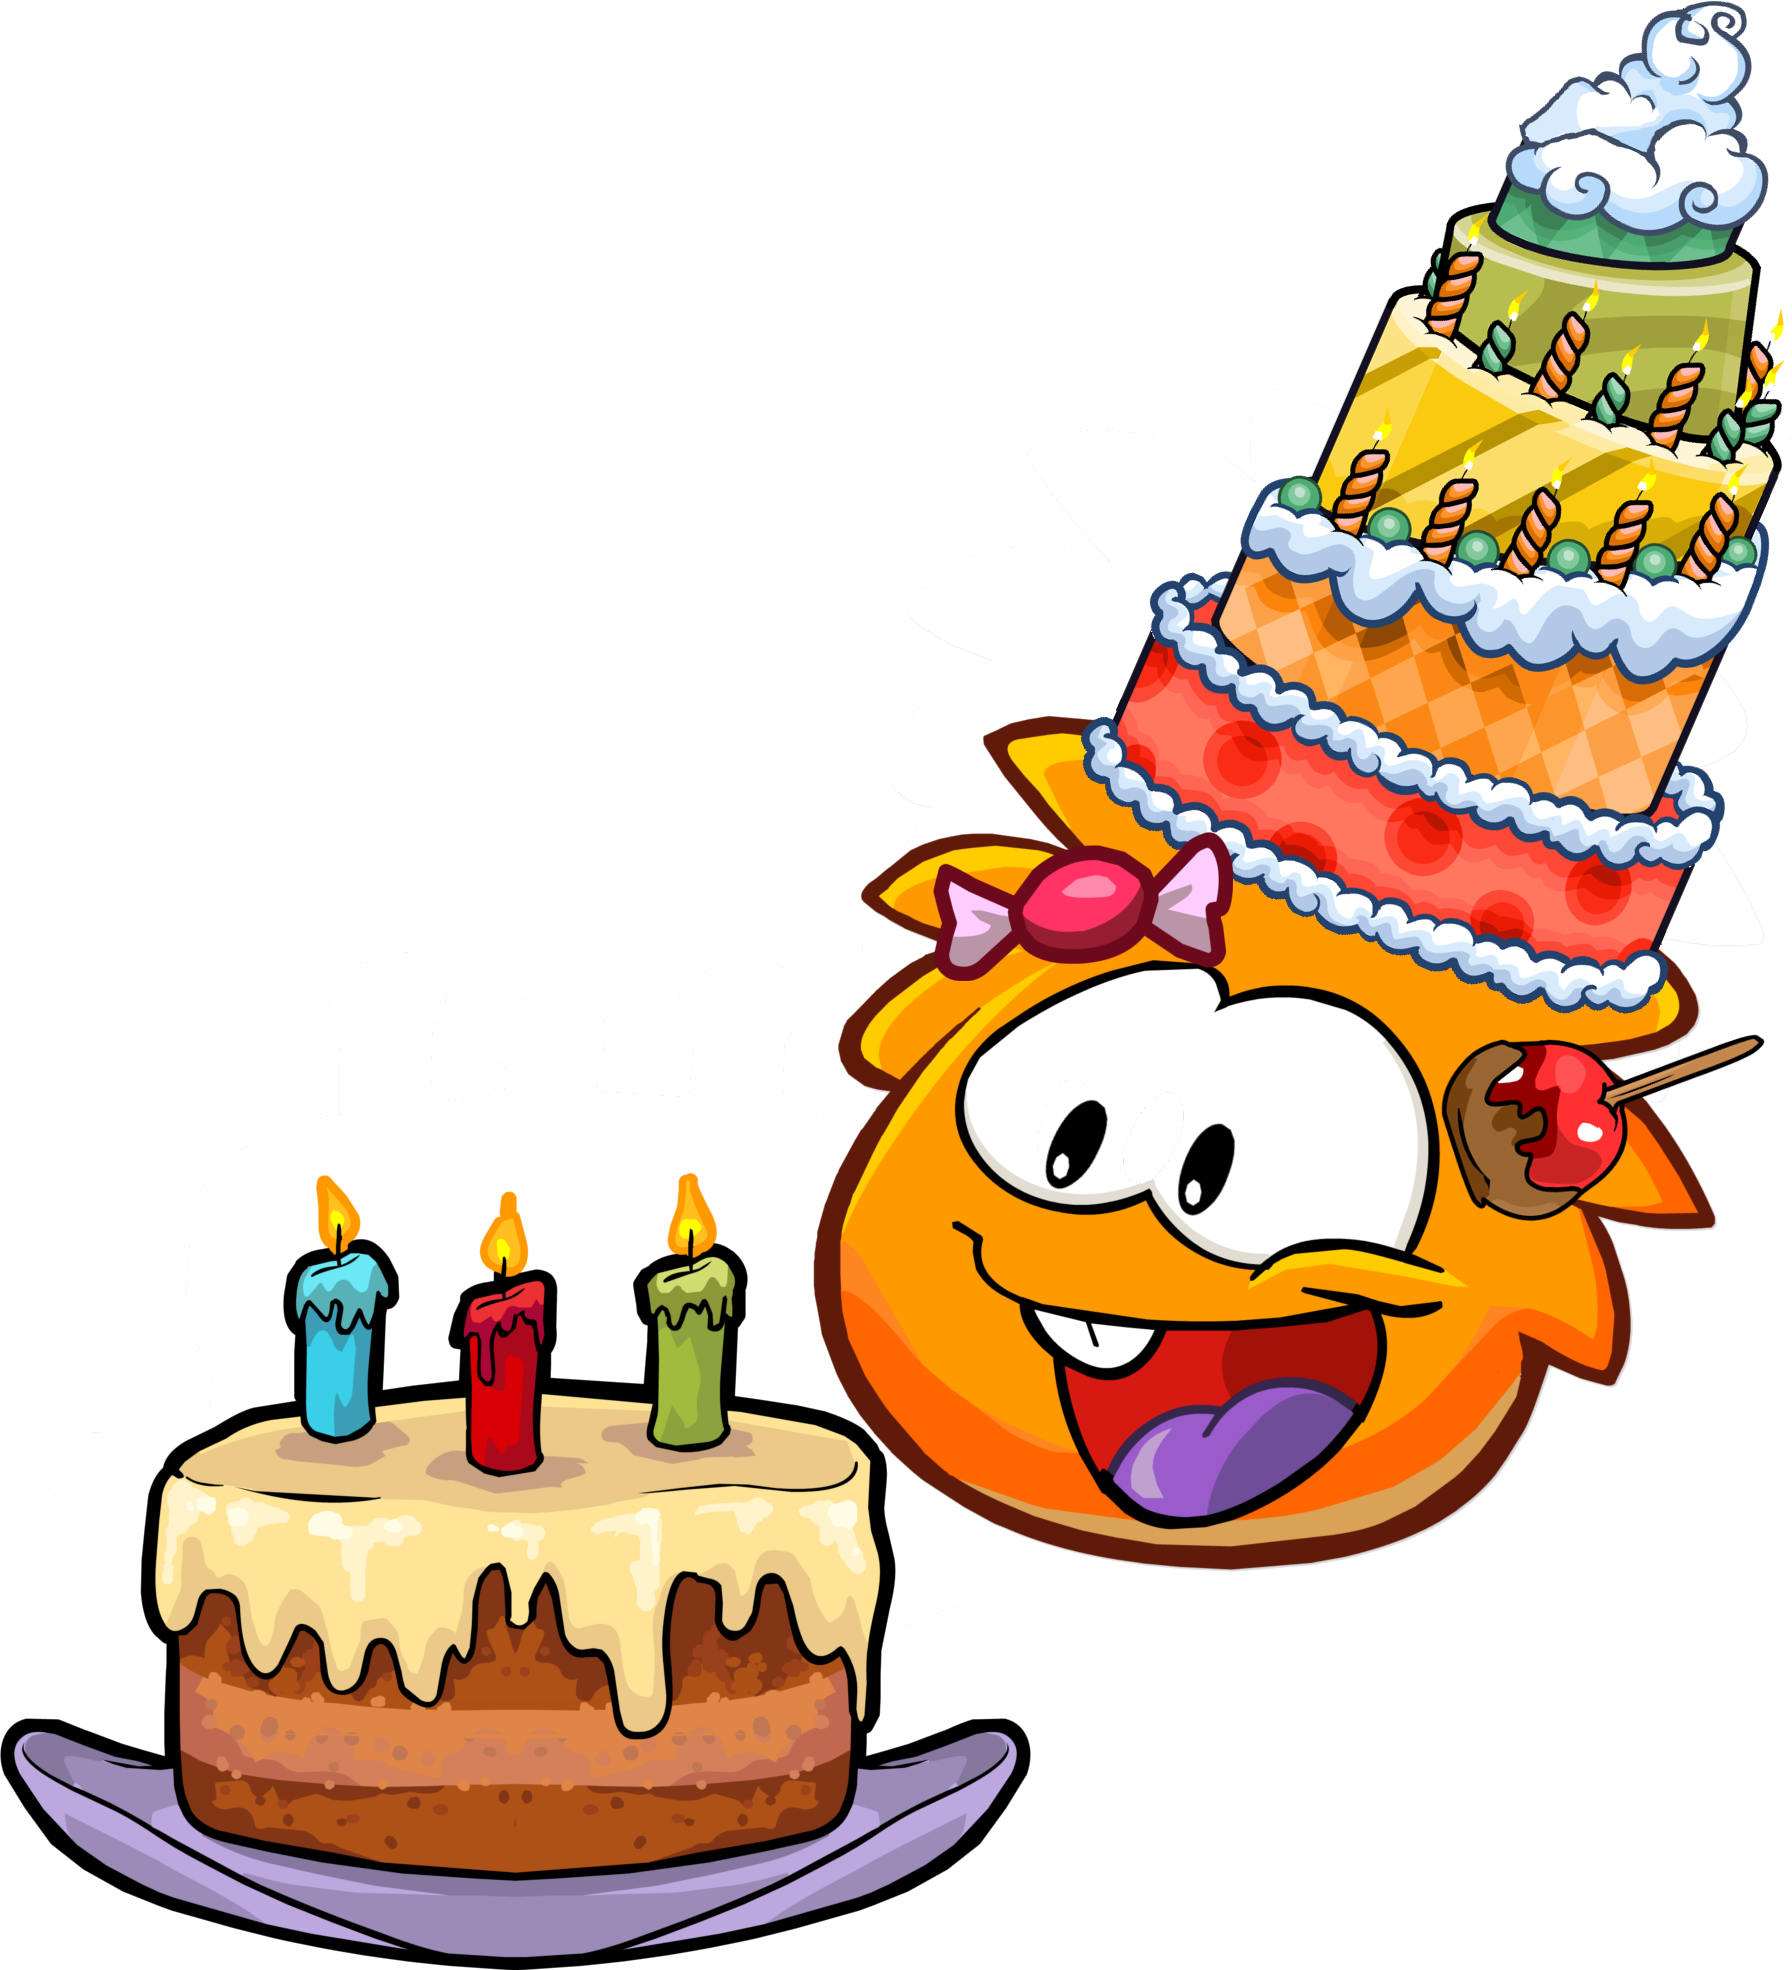 Birthday Cake Club Penguin Party Hat Clip Art - Birthday Cake Club Penguin Party Hat Clip Art (1792x1970)